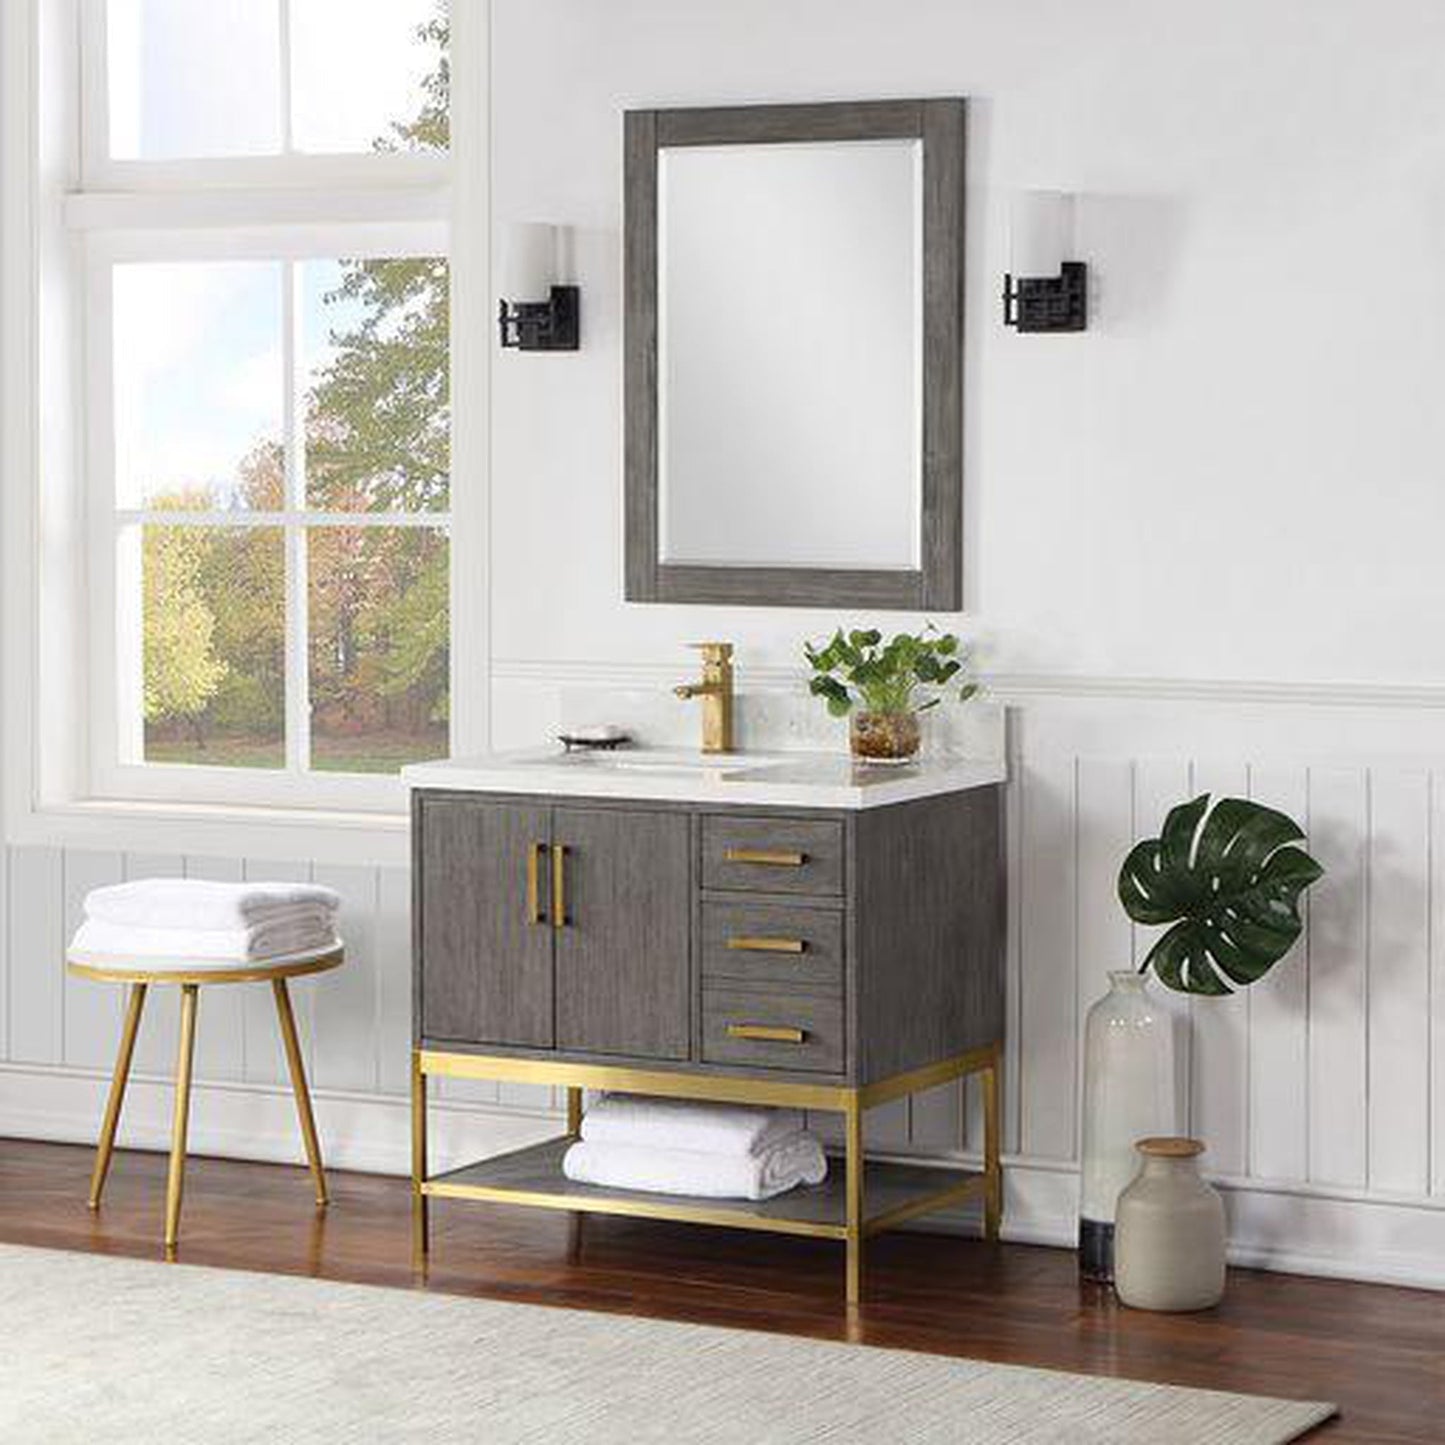 Altair Wildy 36" Classical Grey Freestanding Single Bathroom Vanity Set With Mirror, Stylish Composite Grain White Stone Top, Rectangular Undermount Ceramic Sink, Overflow, and Backsplash